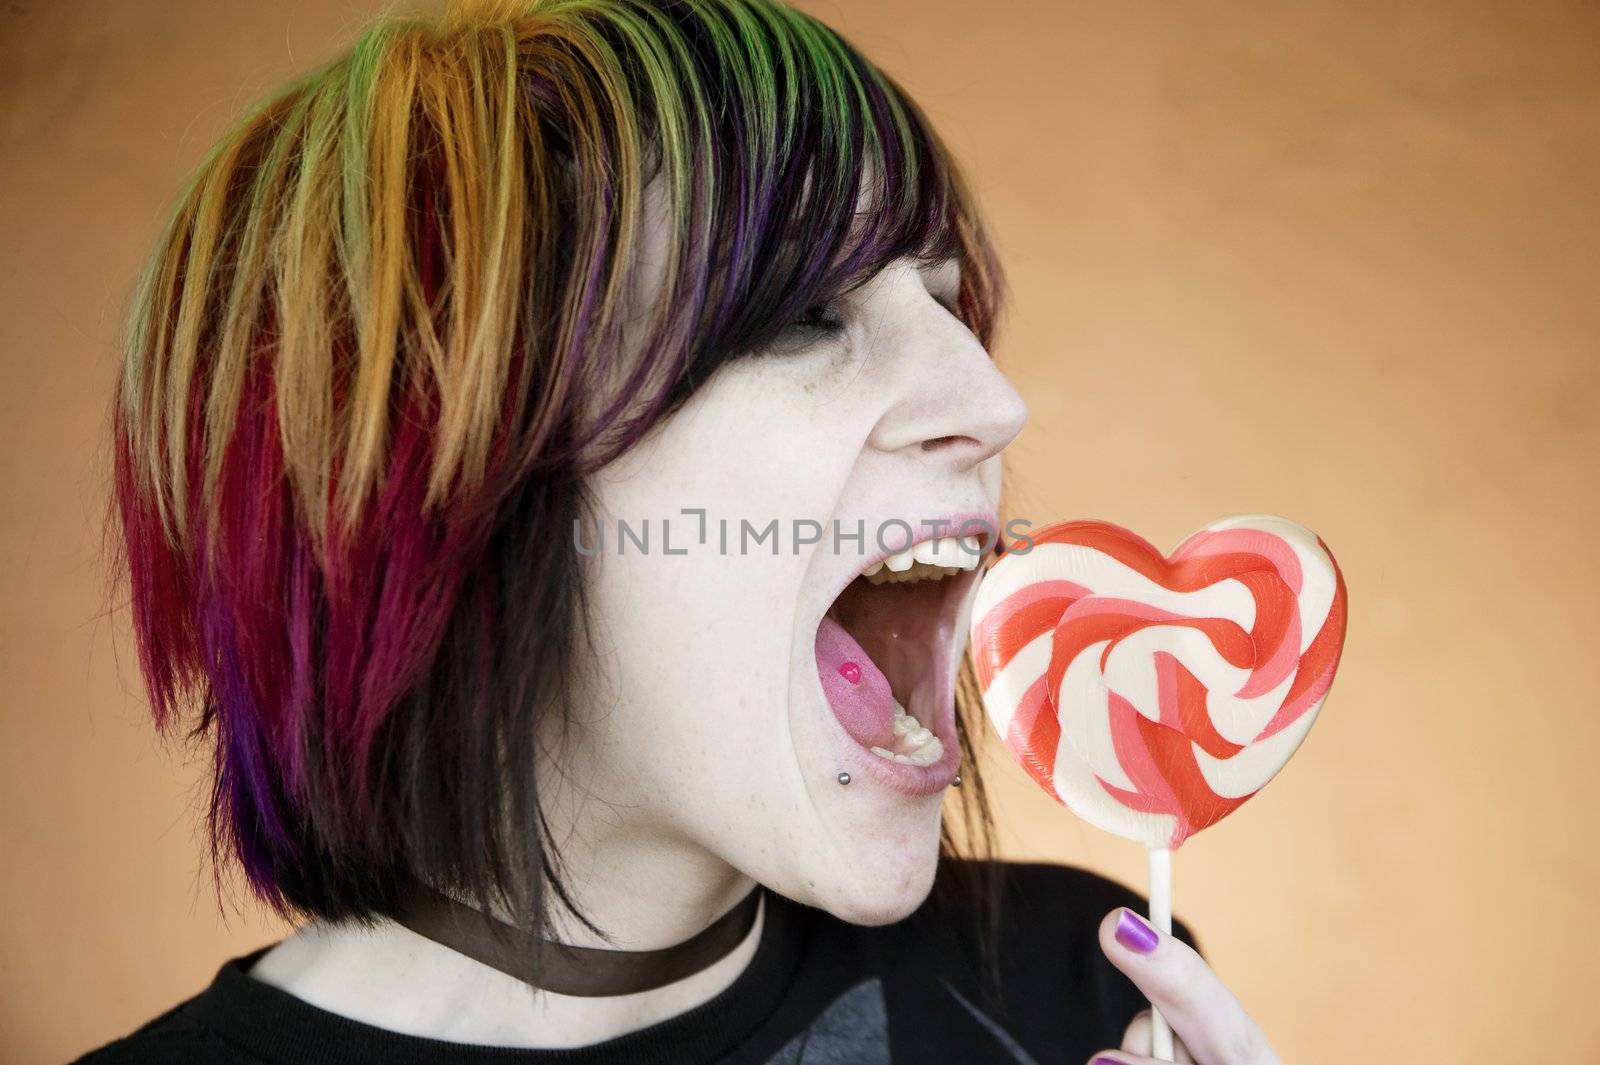 Alternative Girl Eating a Heart Lollipop by Creatista